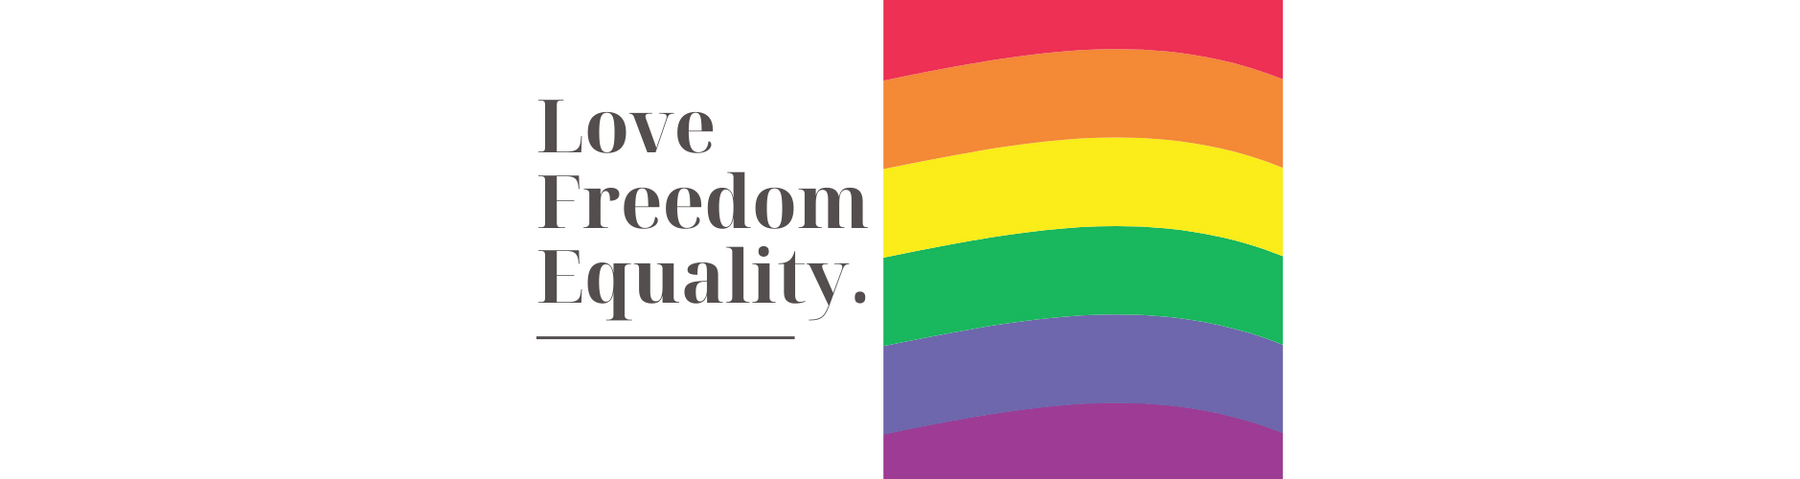 Gay Pride, Celebrating Love, Freedom & Equality